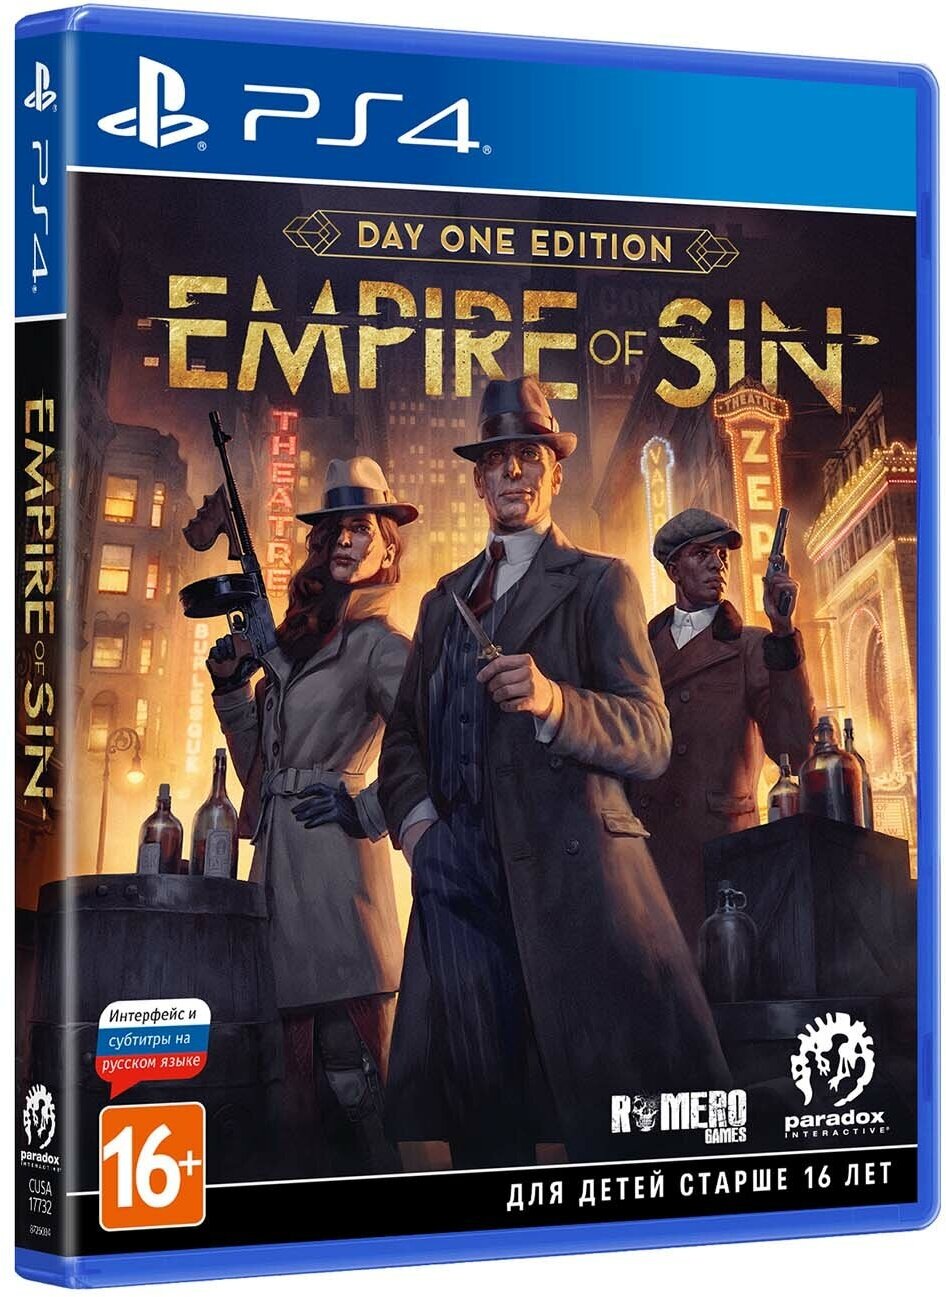 PS4 игра Paradox Interactive Empire of Sin. Издание первого дня